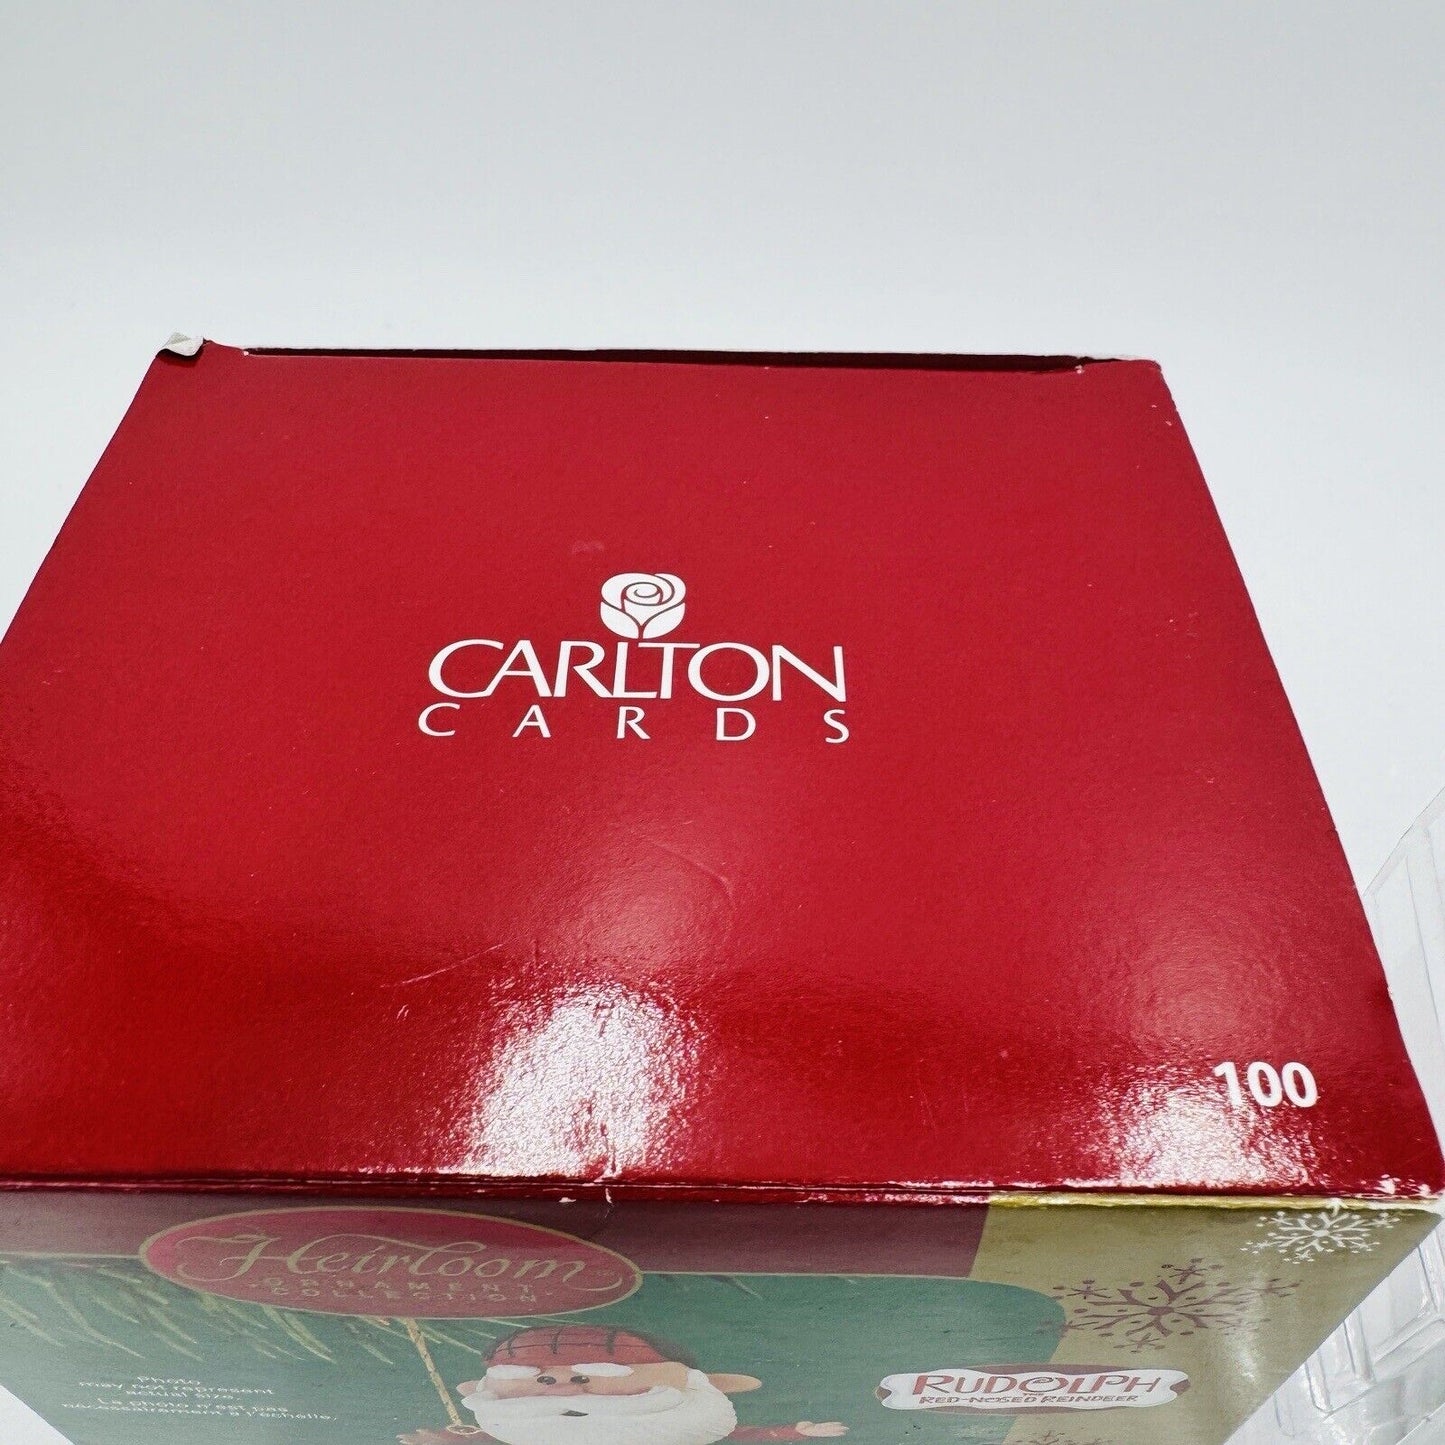 2005 CARLTON Cards Jingle Jingle Jingle RUDOLPH THE RED NOSED REINDEER Music